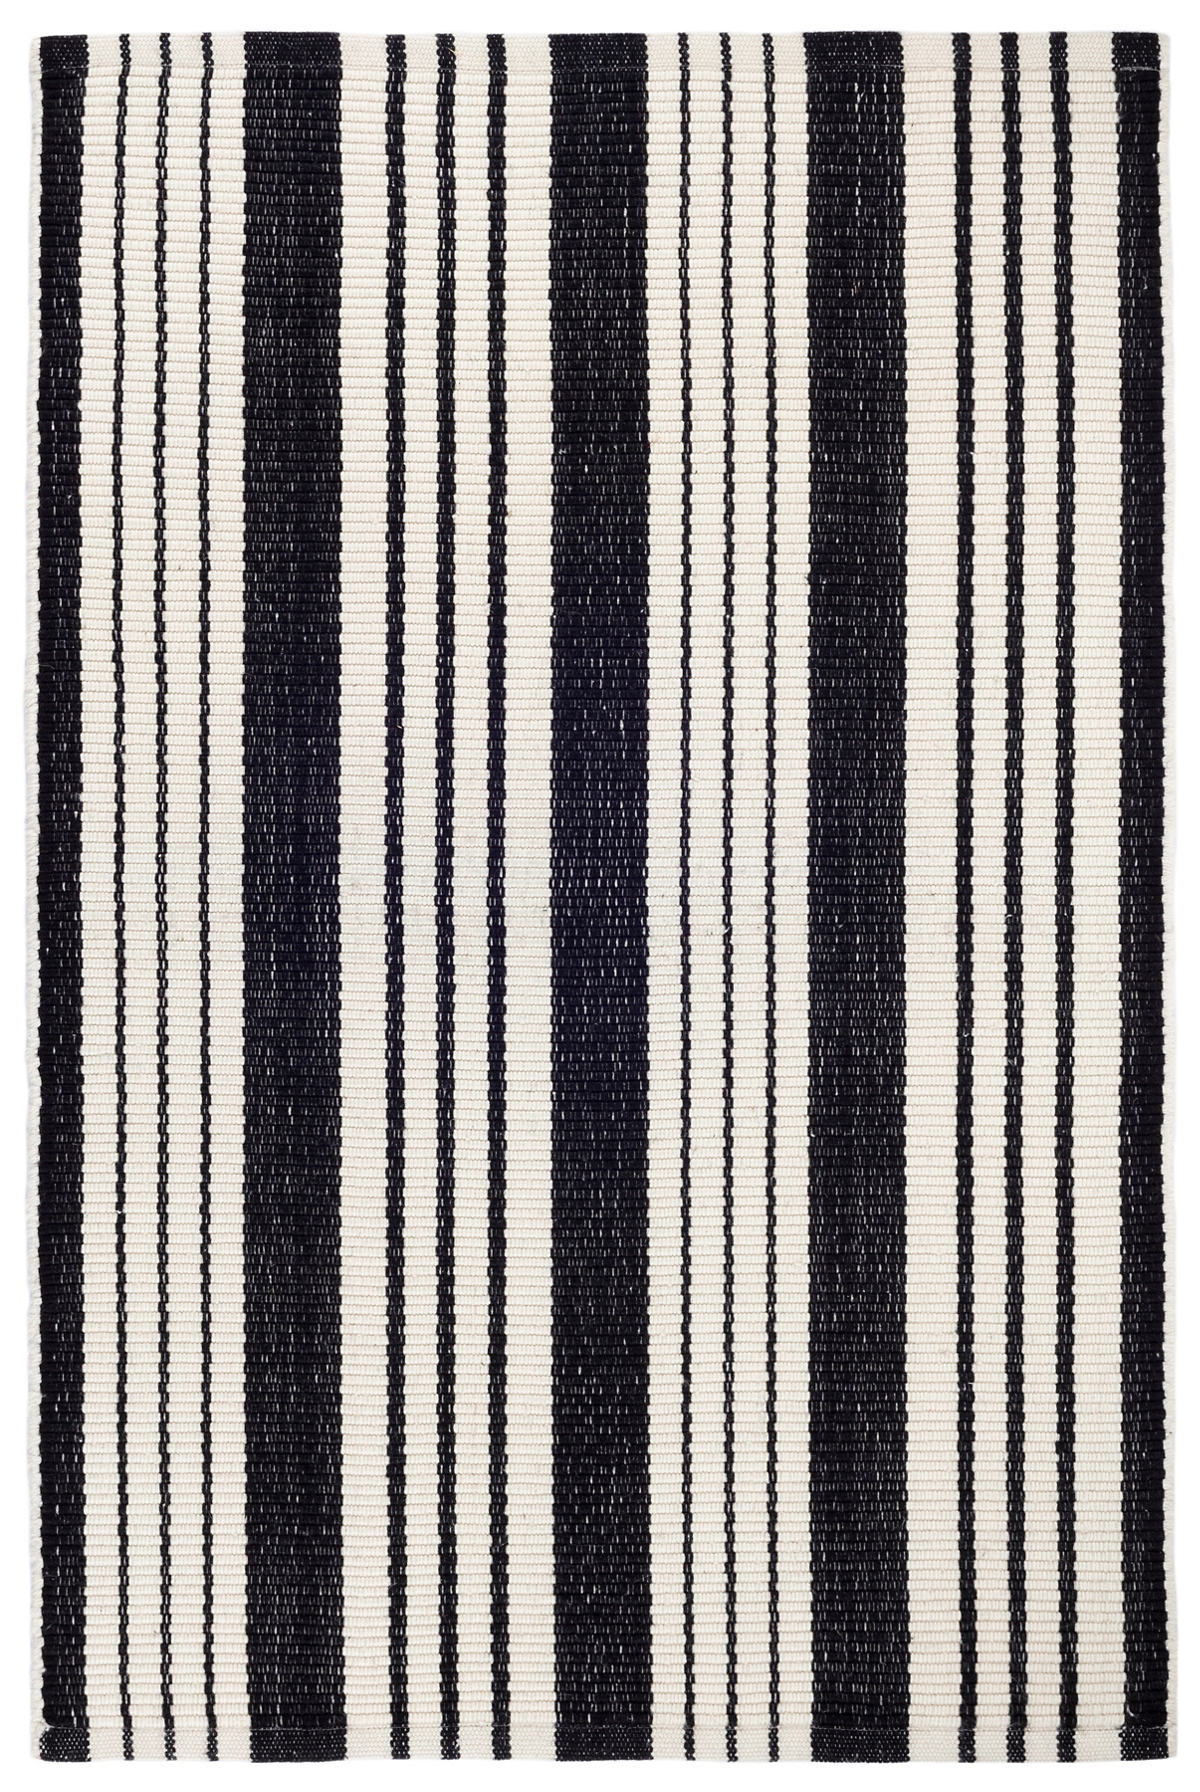 Birmingham Black Indoor Outdoor Rug, Black And White Striped Rugs